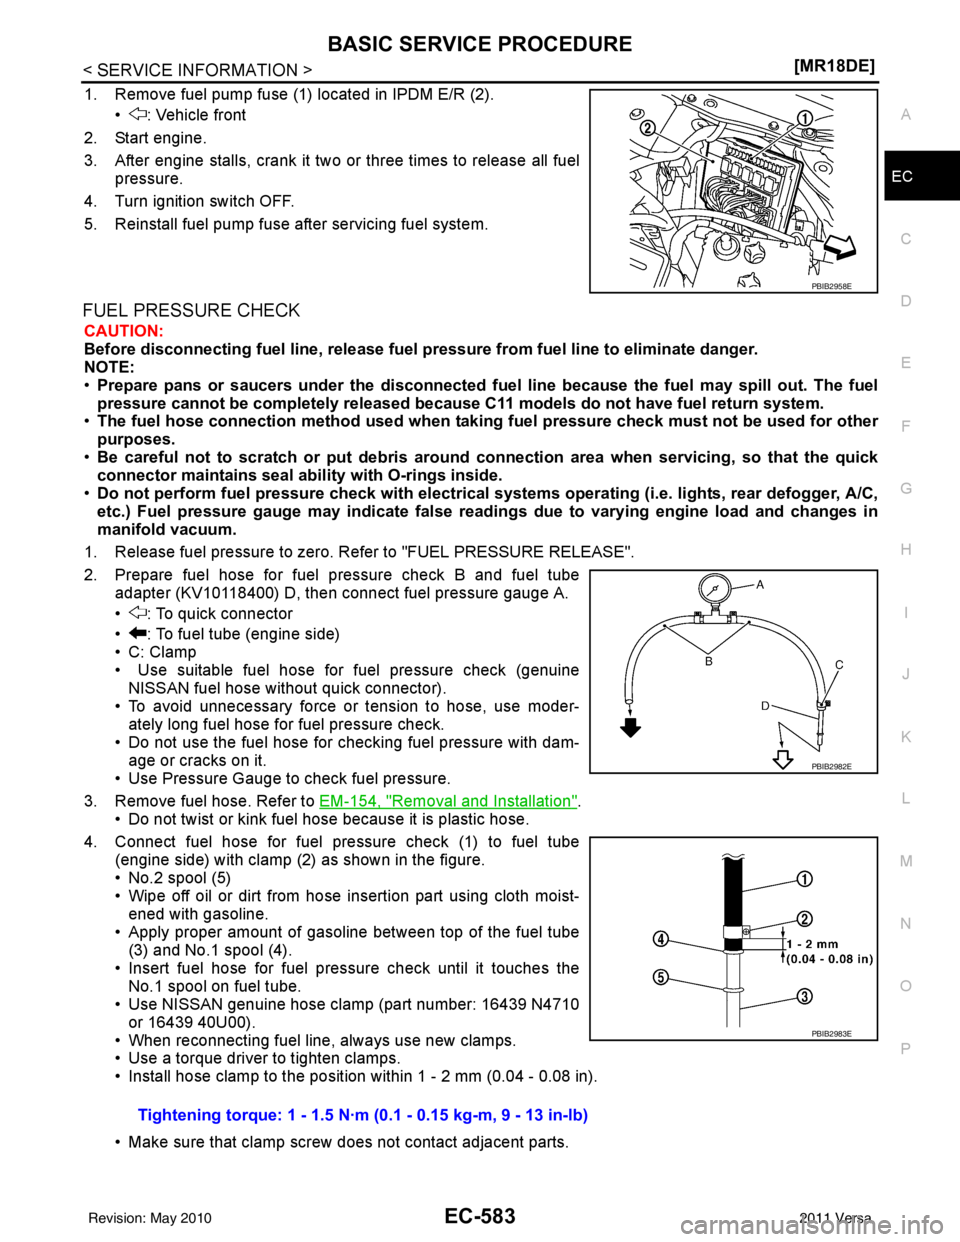 NISSAN TIIDA 2011  Service Repair Manual BASIC SERVICE PROCEDUREEC-583
< SERVICE INFORMATION > [MR18DE]
C
D
E
F
G H
I
J
K L
M A
EC
NP
O
1. Remove fuel pump fuse (1) located in IPDM E/R (2).
• : Vehicle front
2. Start engine.
3. After engin